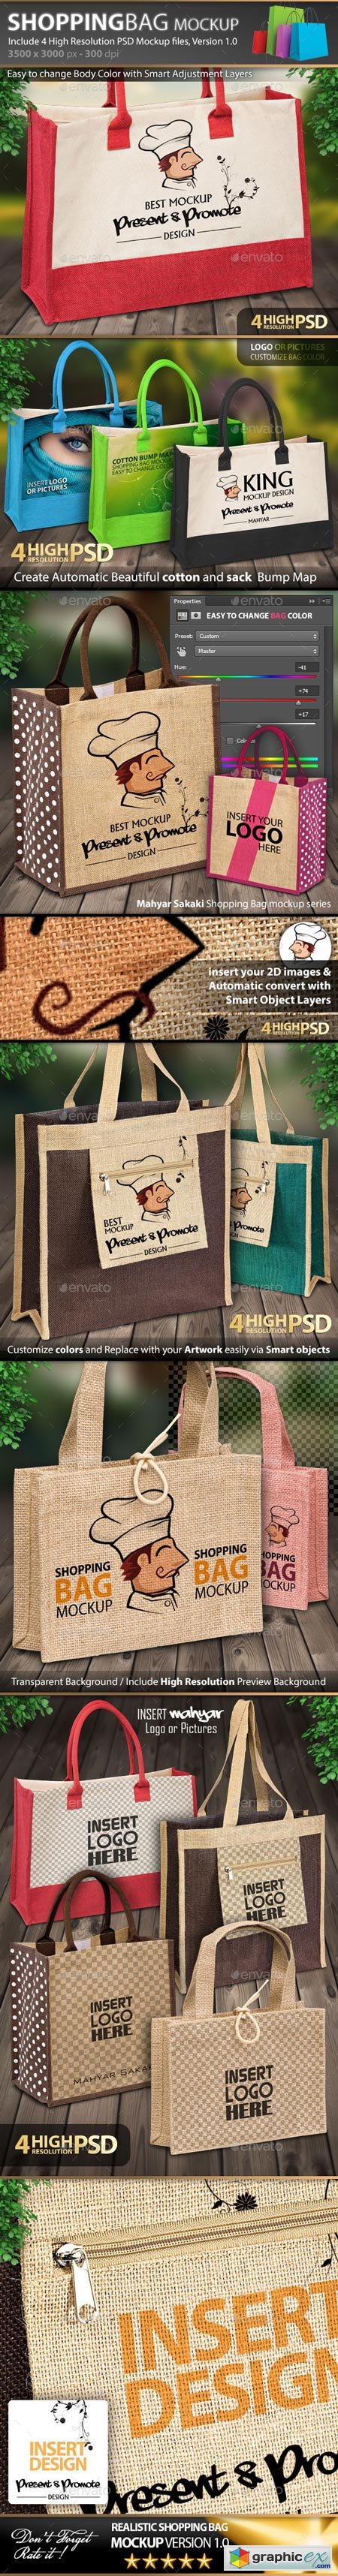 Photorealistic Shopping Bag Mockup V1.0 8929092